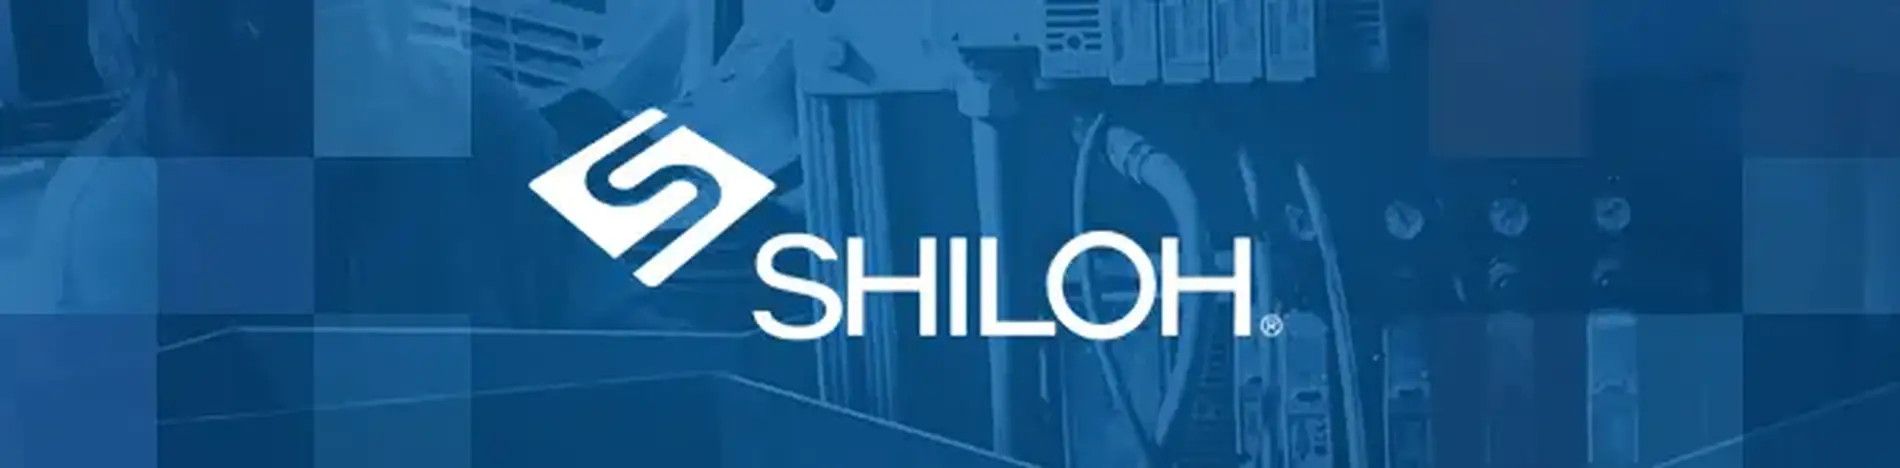 Shiloh Industries sp. z o.o.